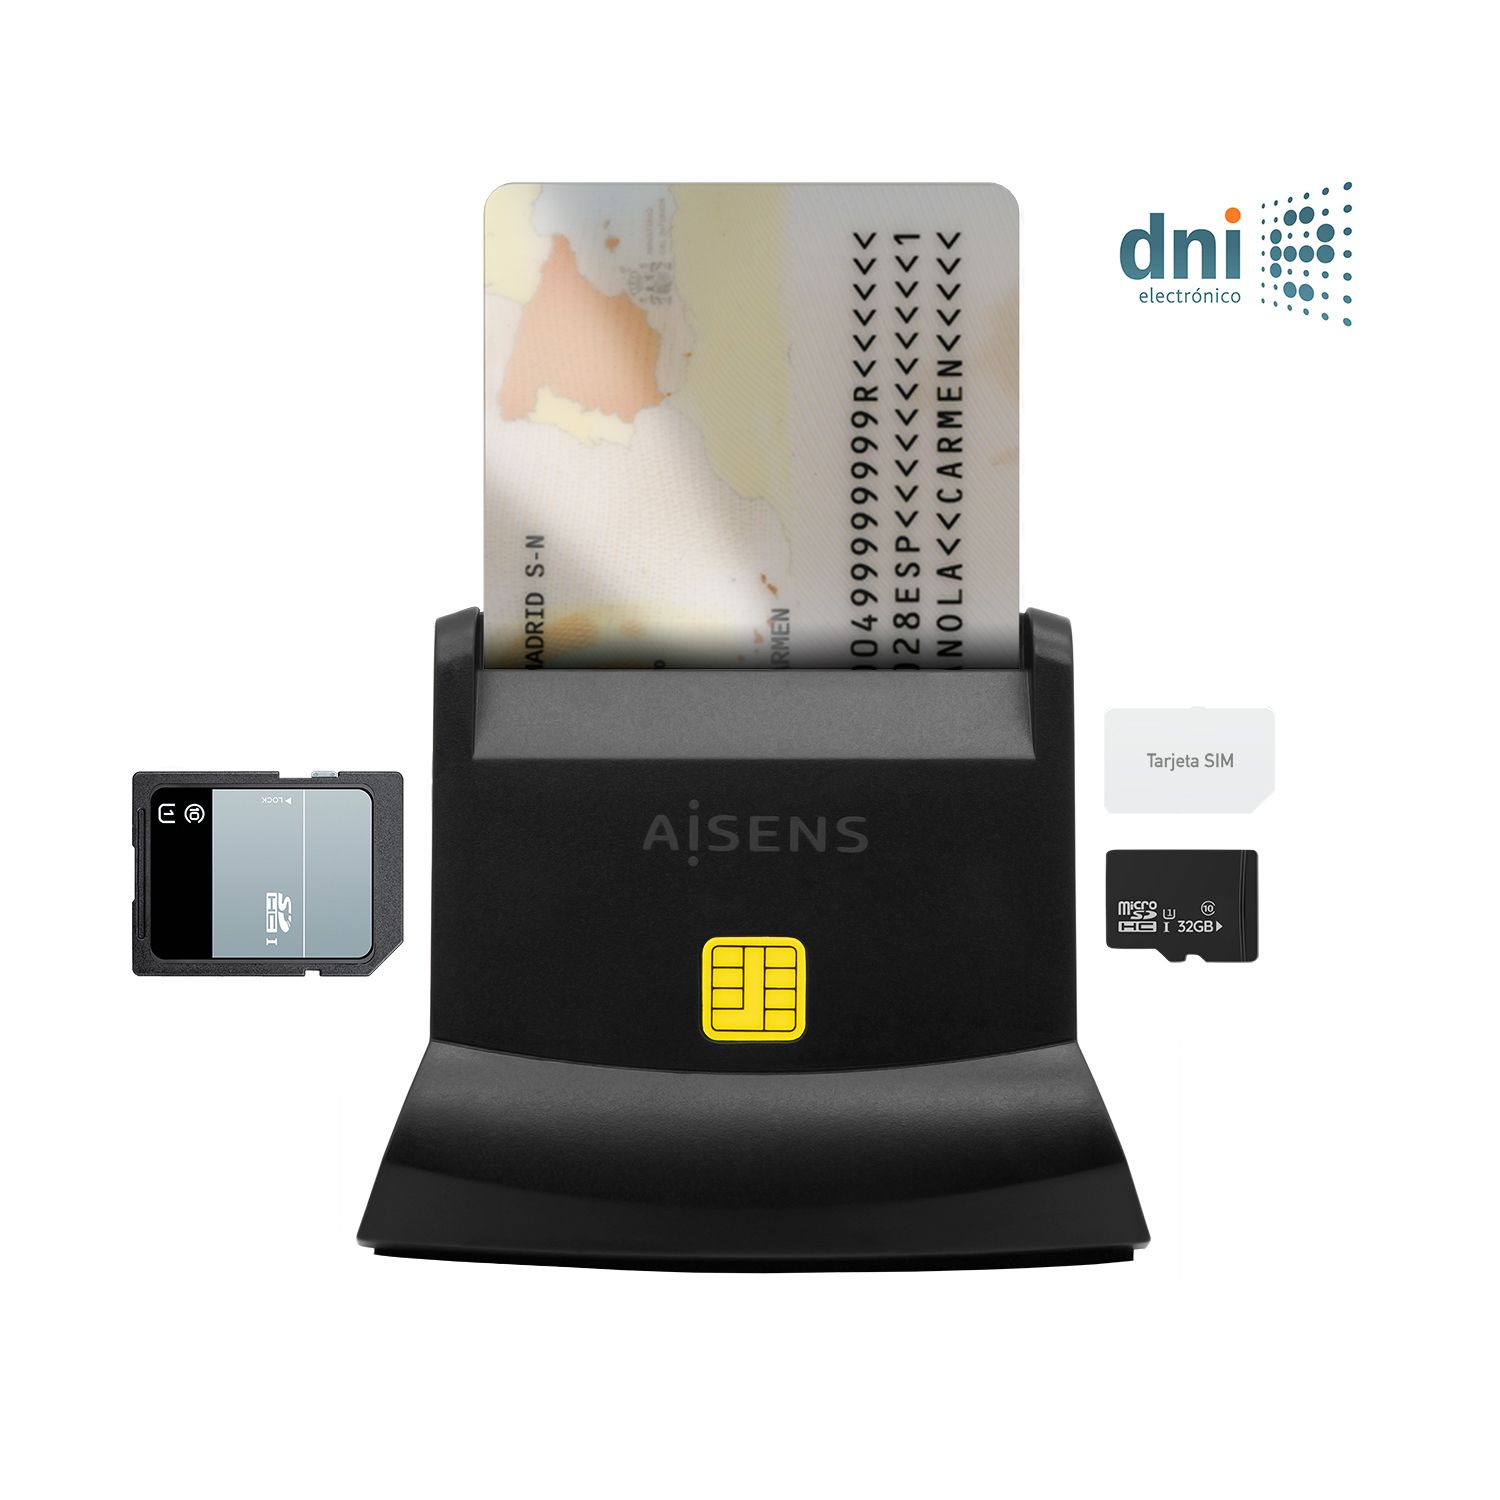 ASCR-SN04CSD-BK - Lector de Tarjetas AISENS Smart Cards DNIe SIM USB-C 2.0 Negro (ASCR-SN04CSD-BK)